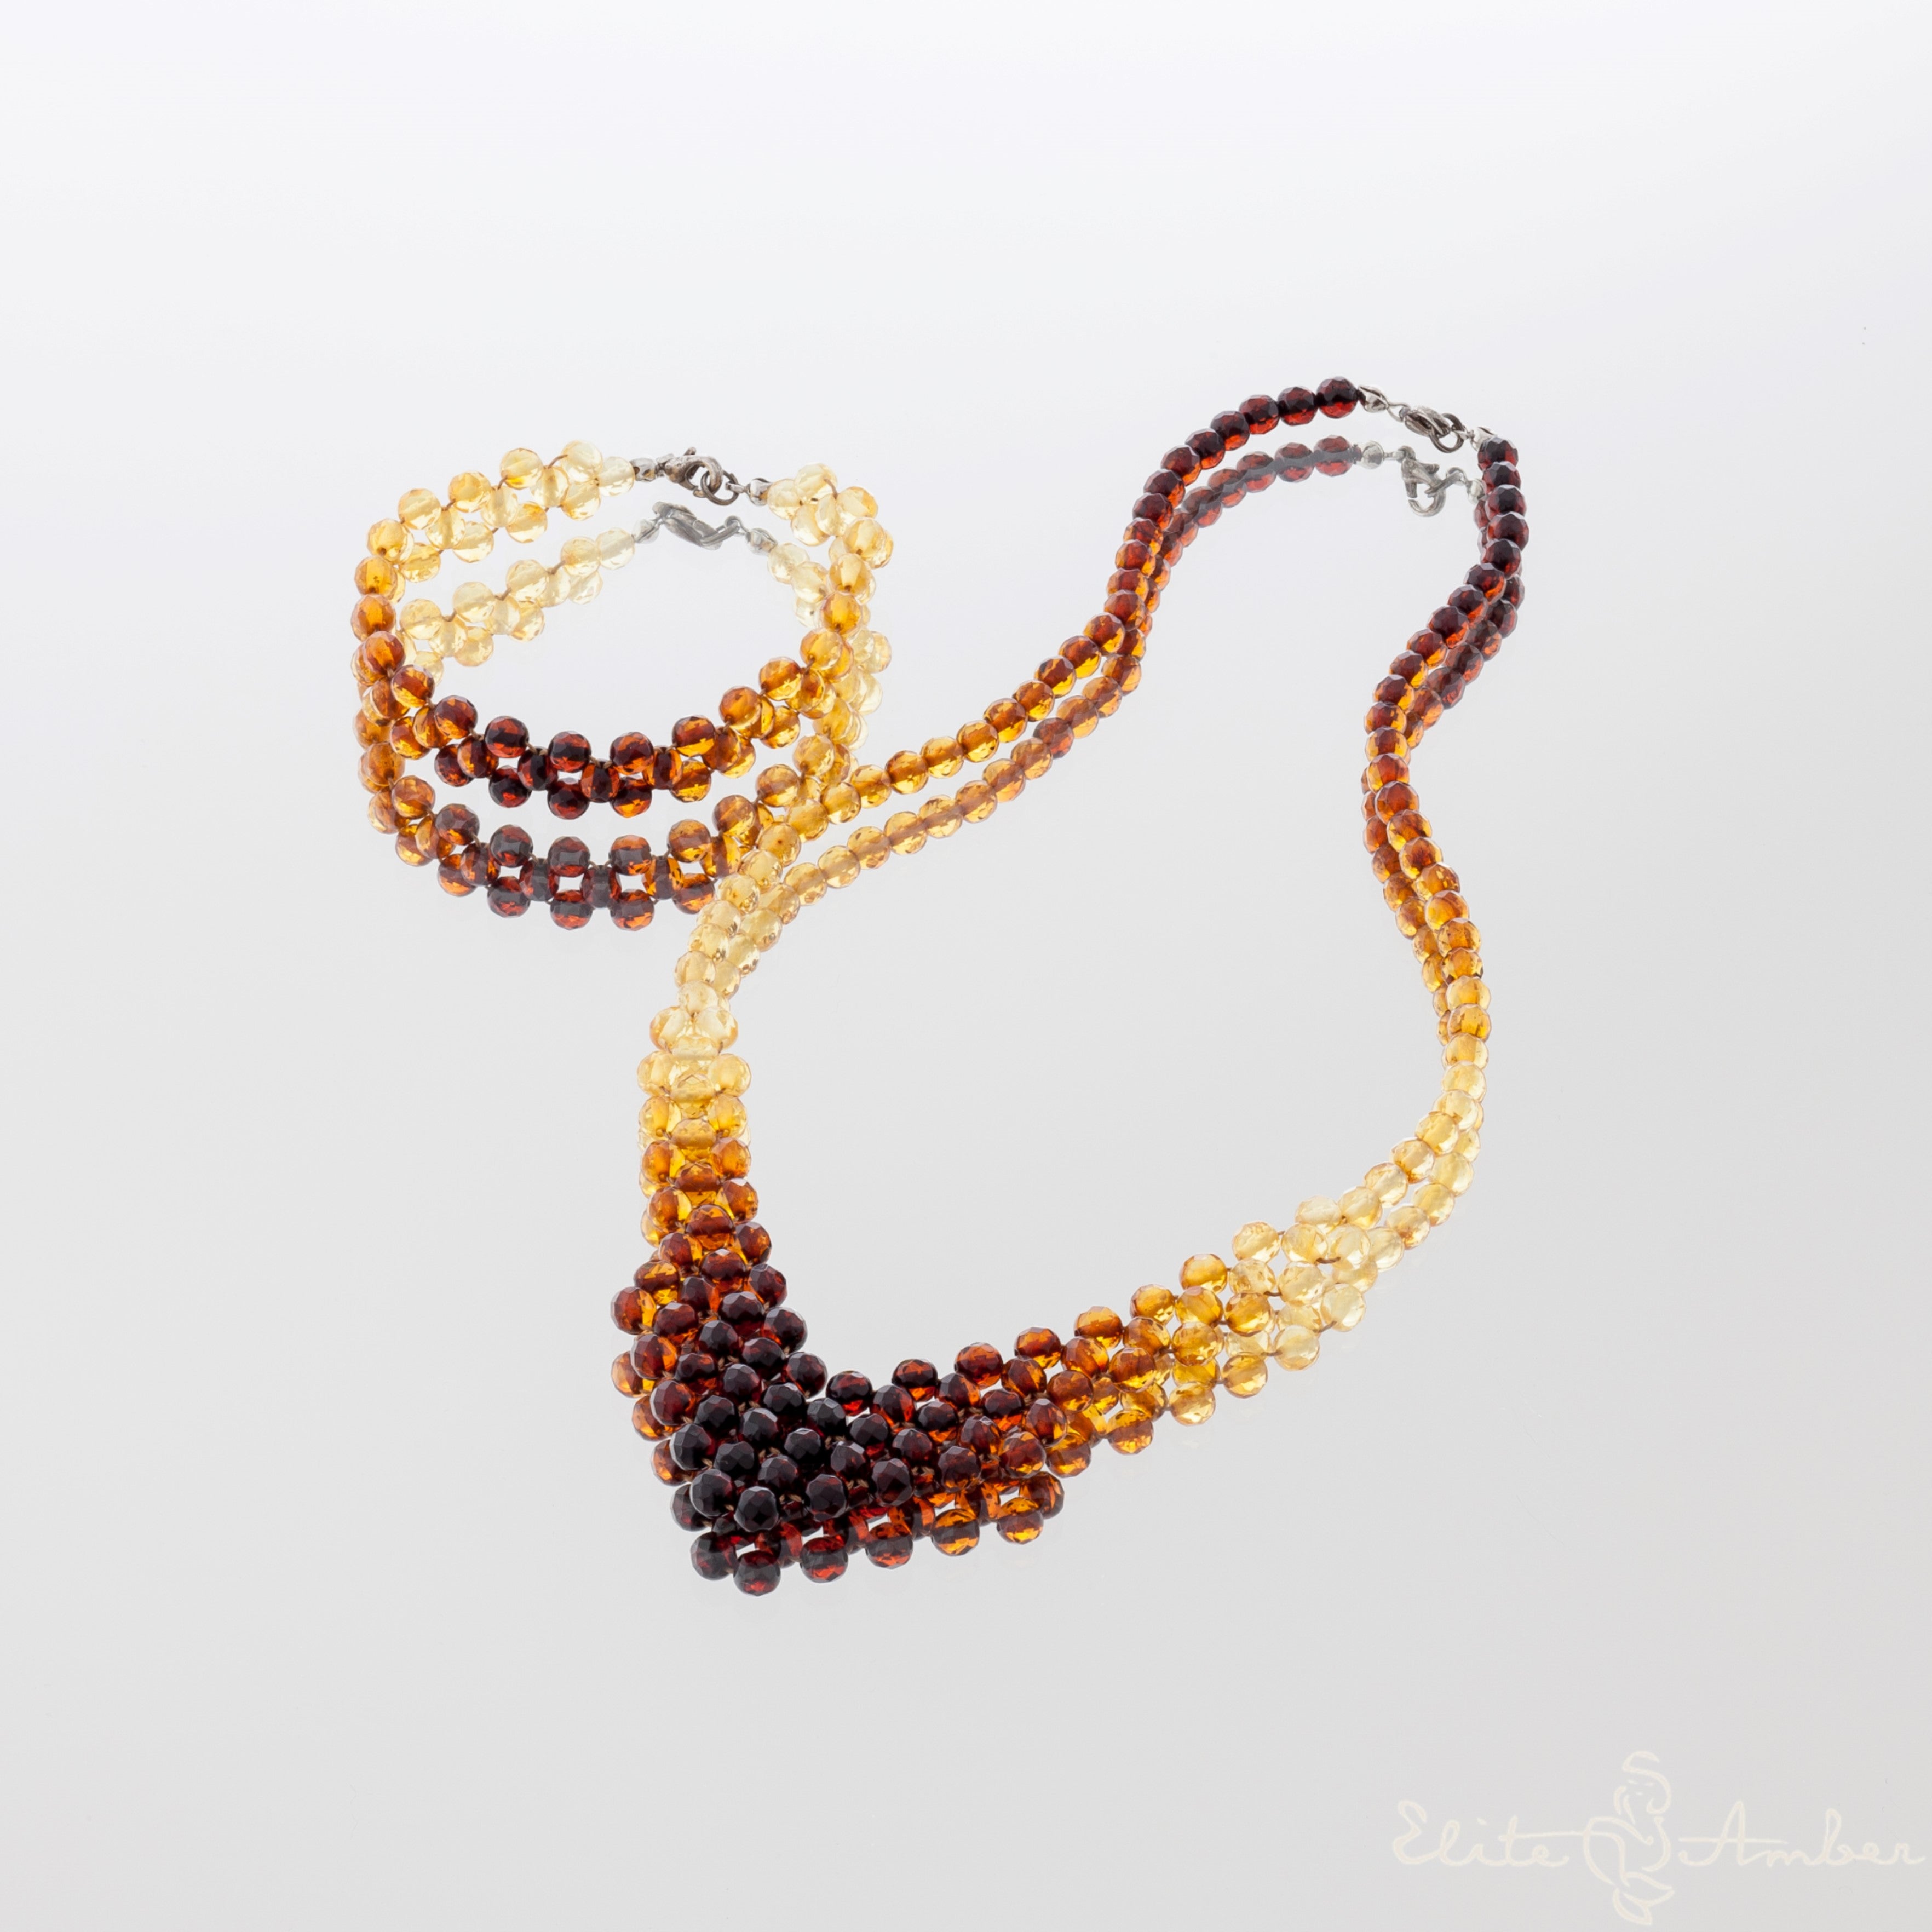 Amber necklace and bracelet "Princess little rainbow"